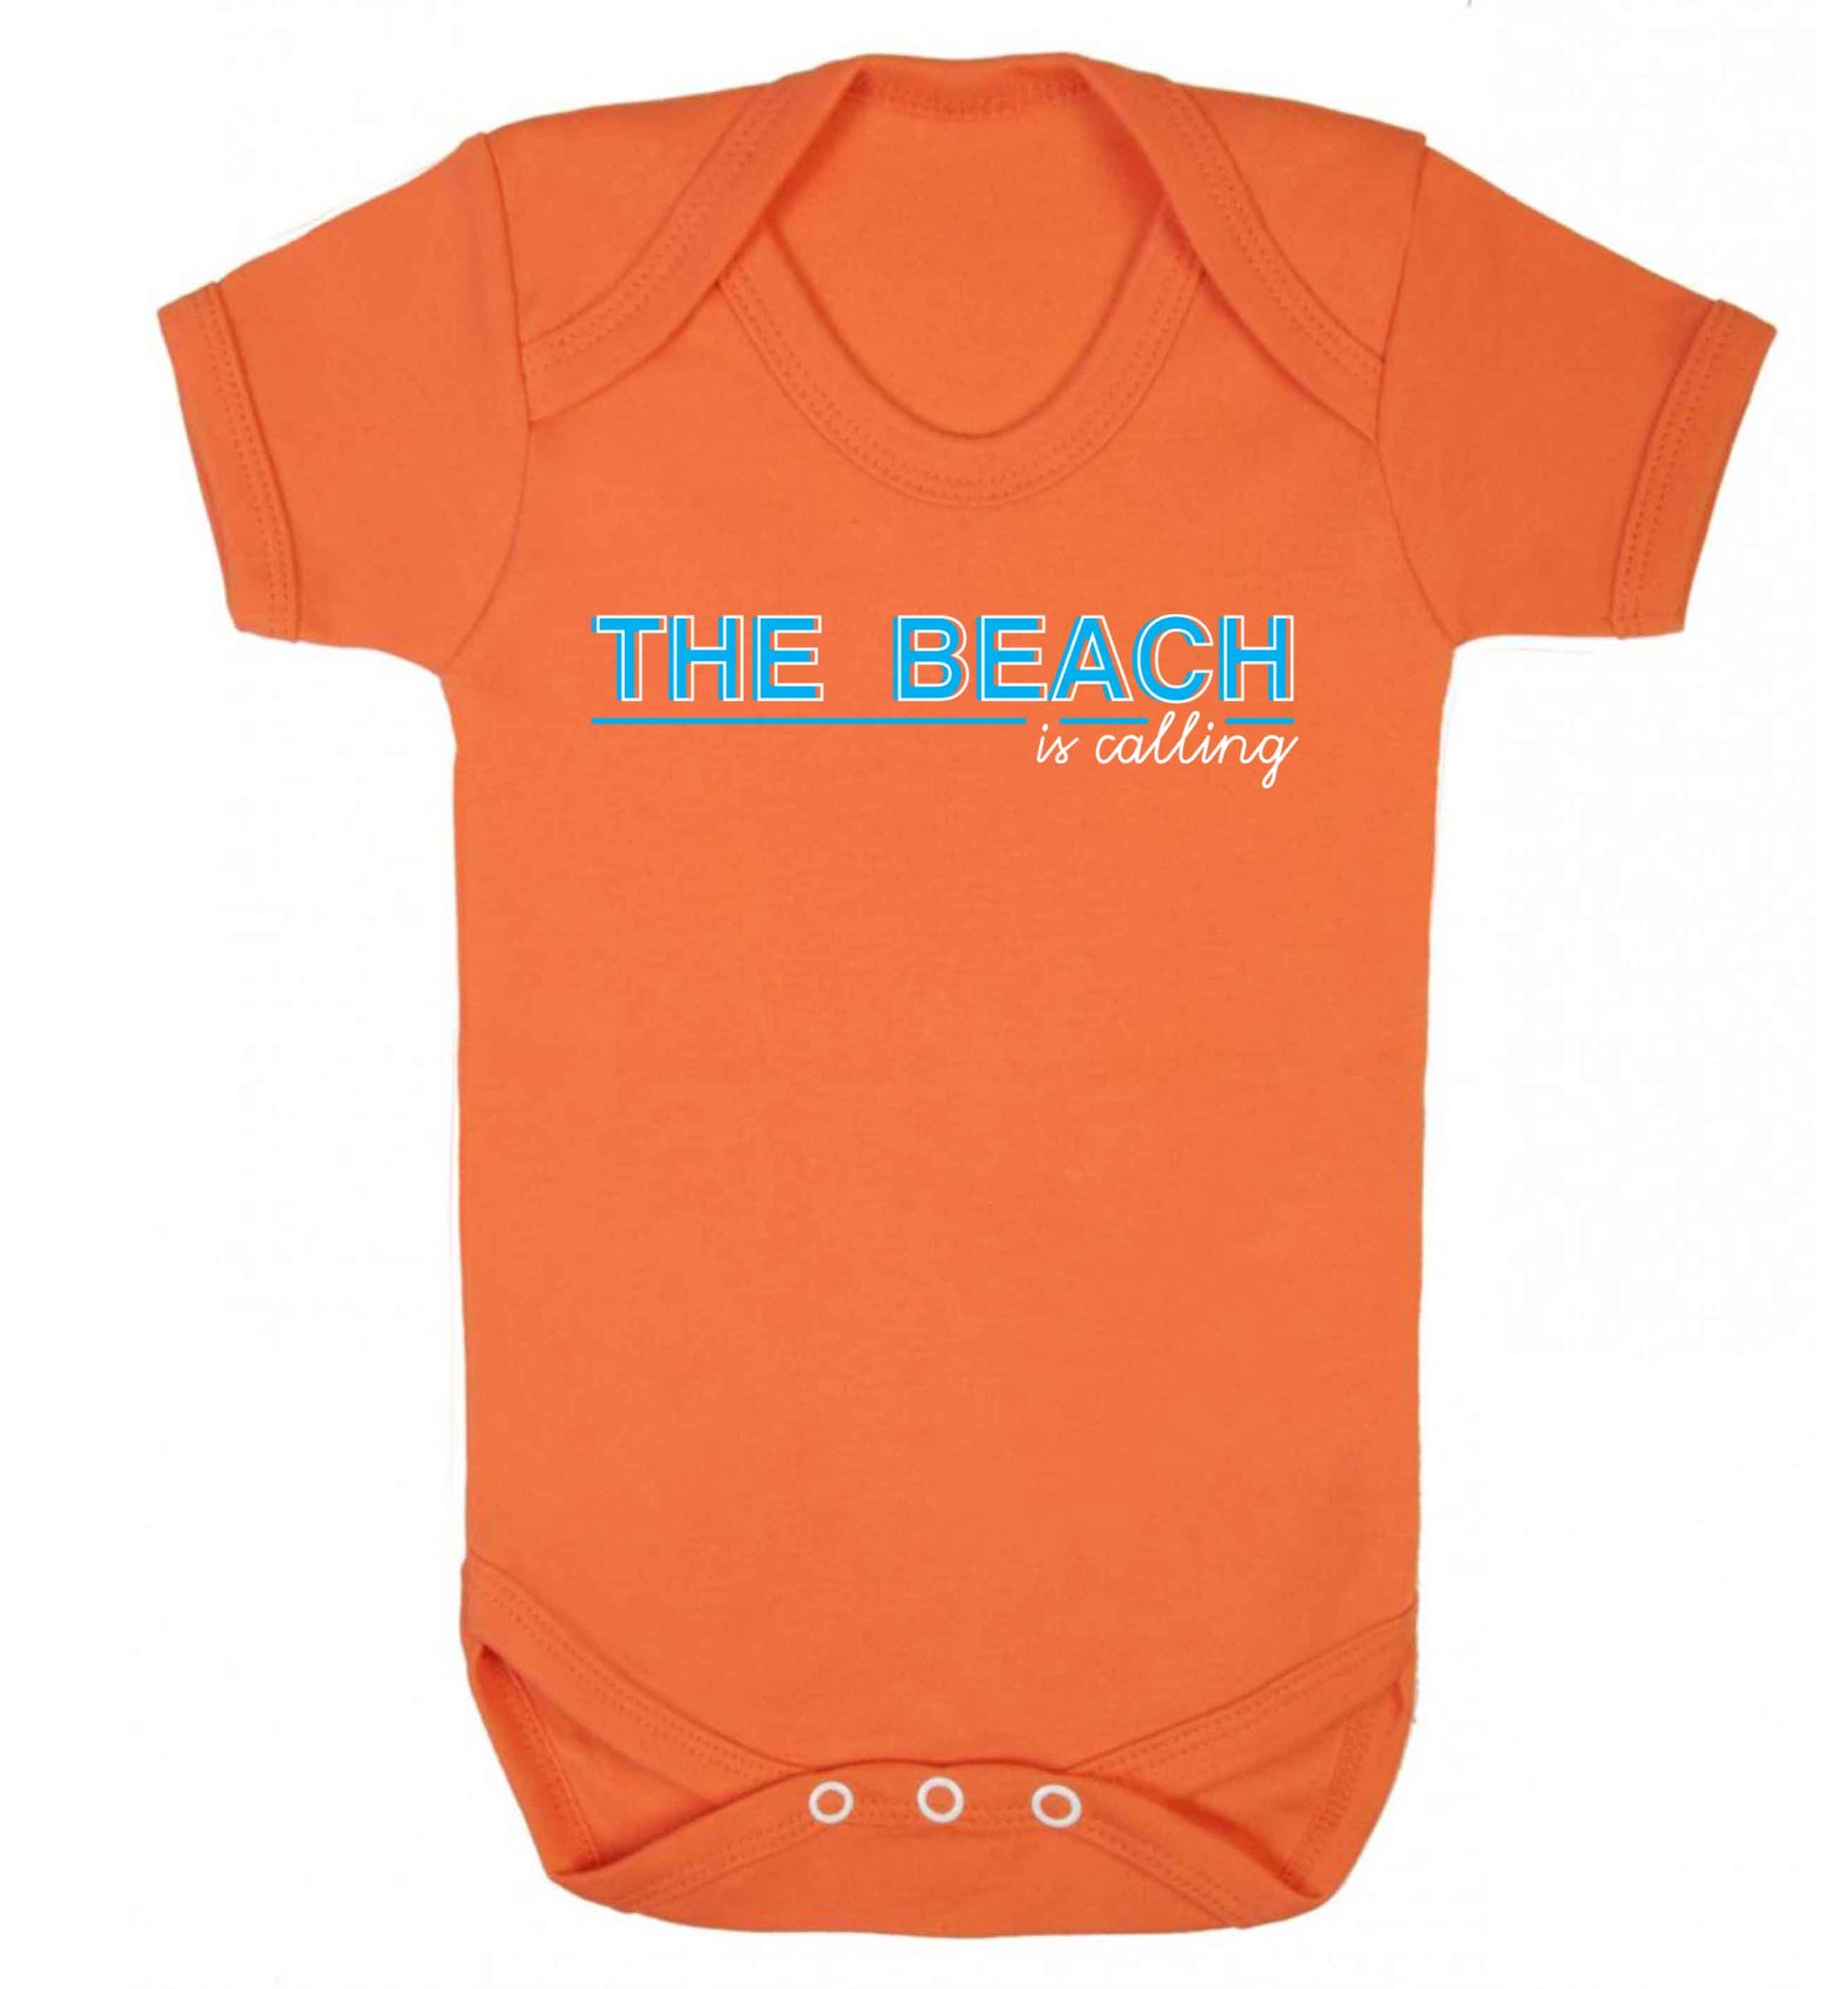 The beach is calling Baby Vest orange 18-24 months